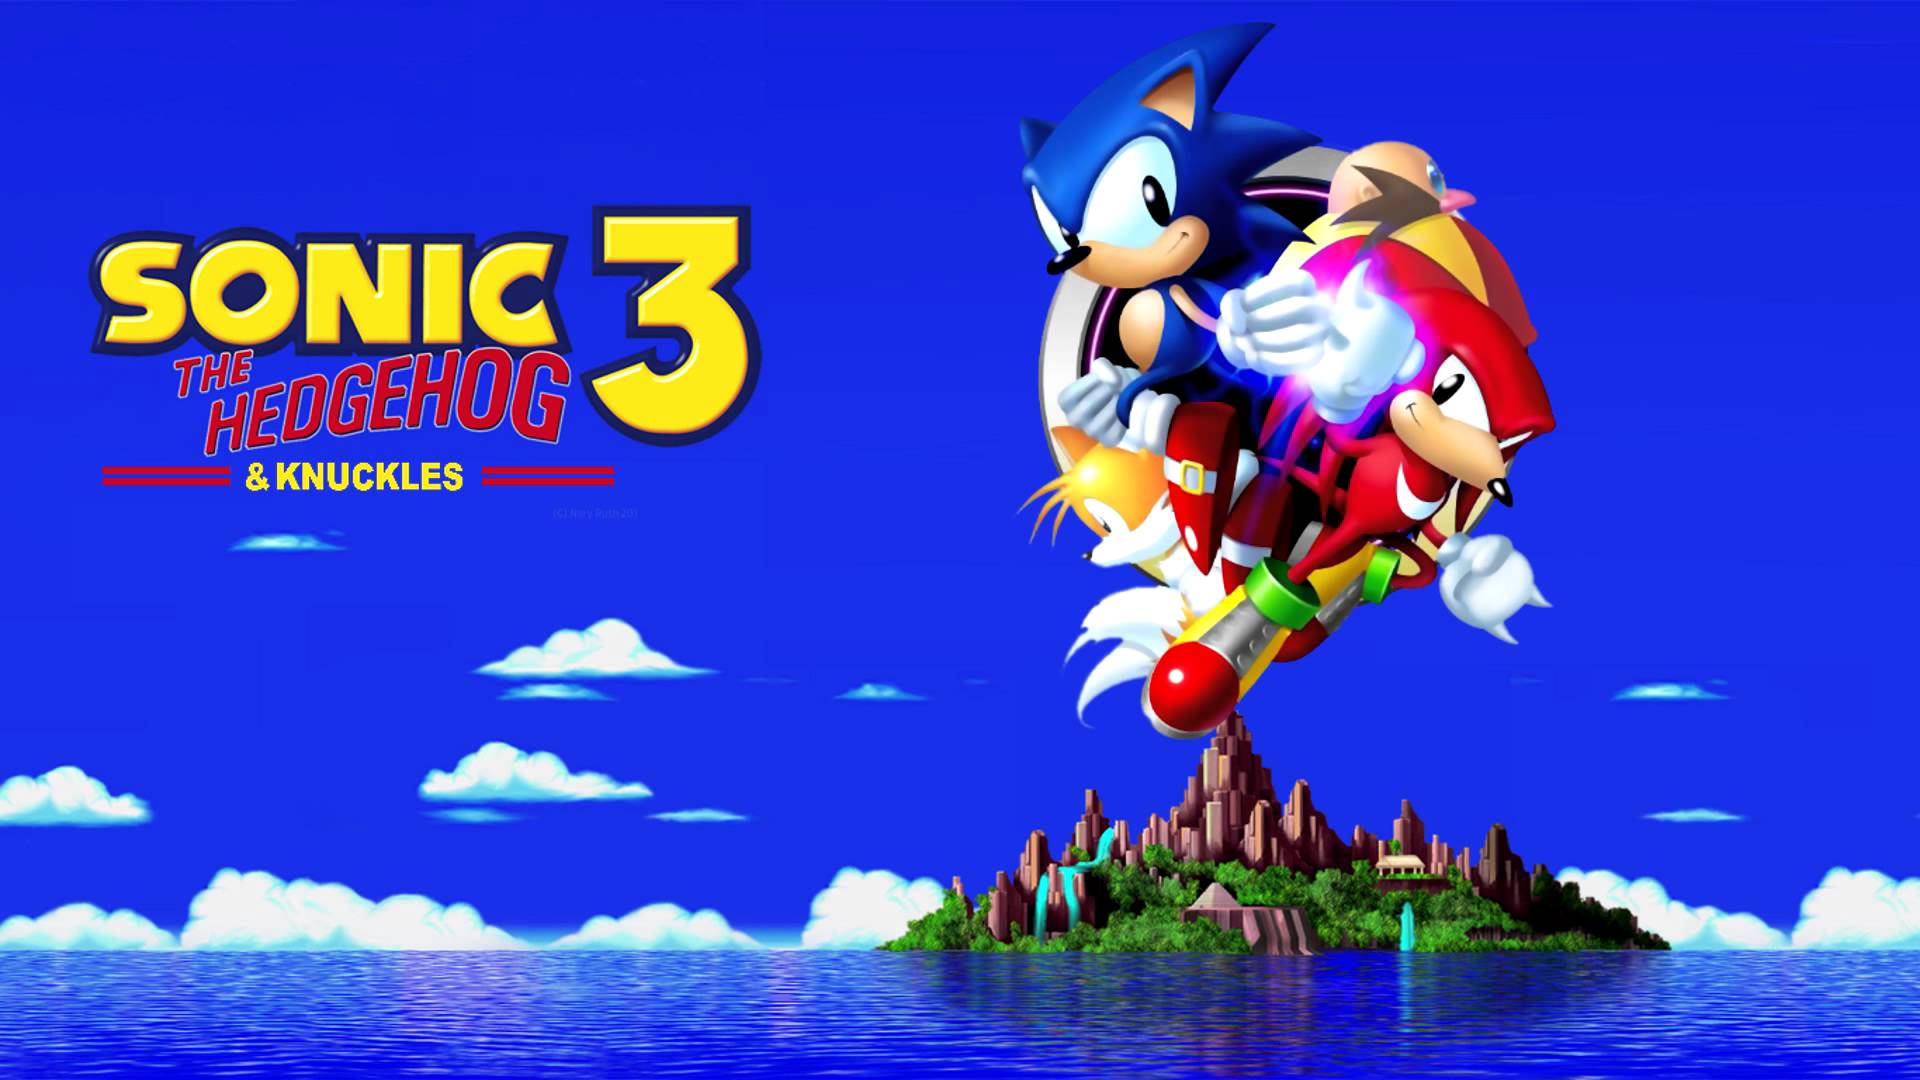 Sonic & Knuckles + Sonic The Hedgehog 3 wallpaper, Video Game, HQ Sonic & Knuckles + Sonic The Hedgehog 3 pictureK Wallpaper 2019